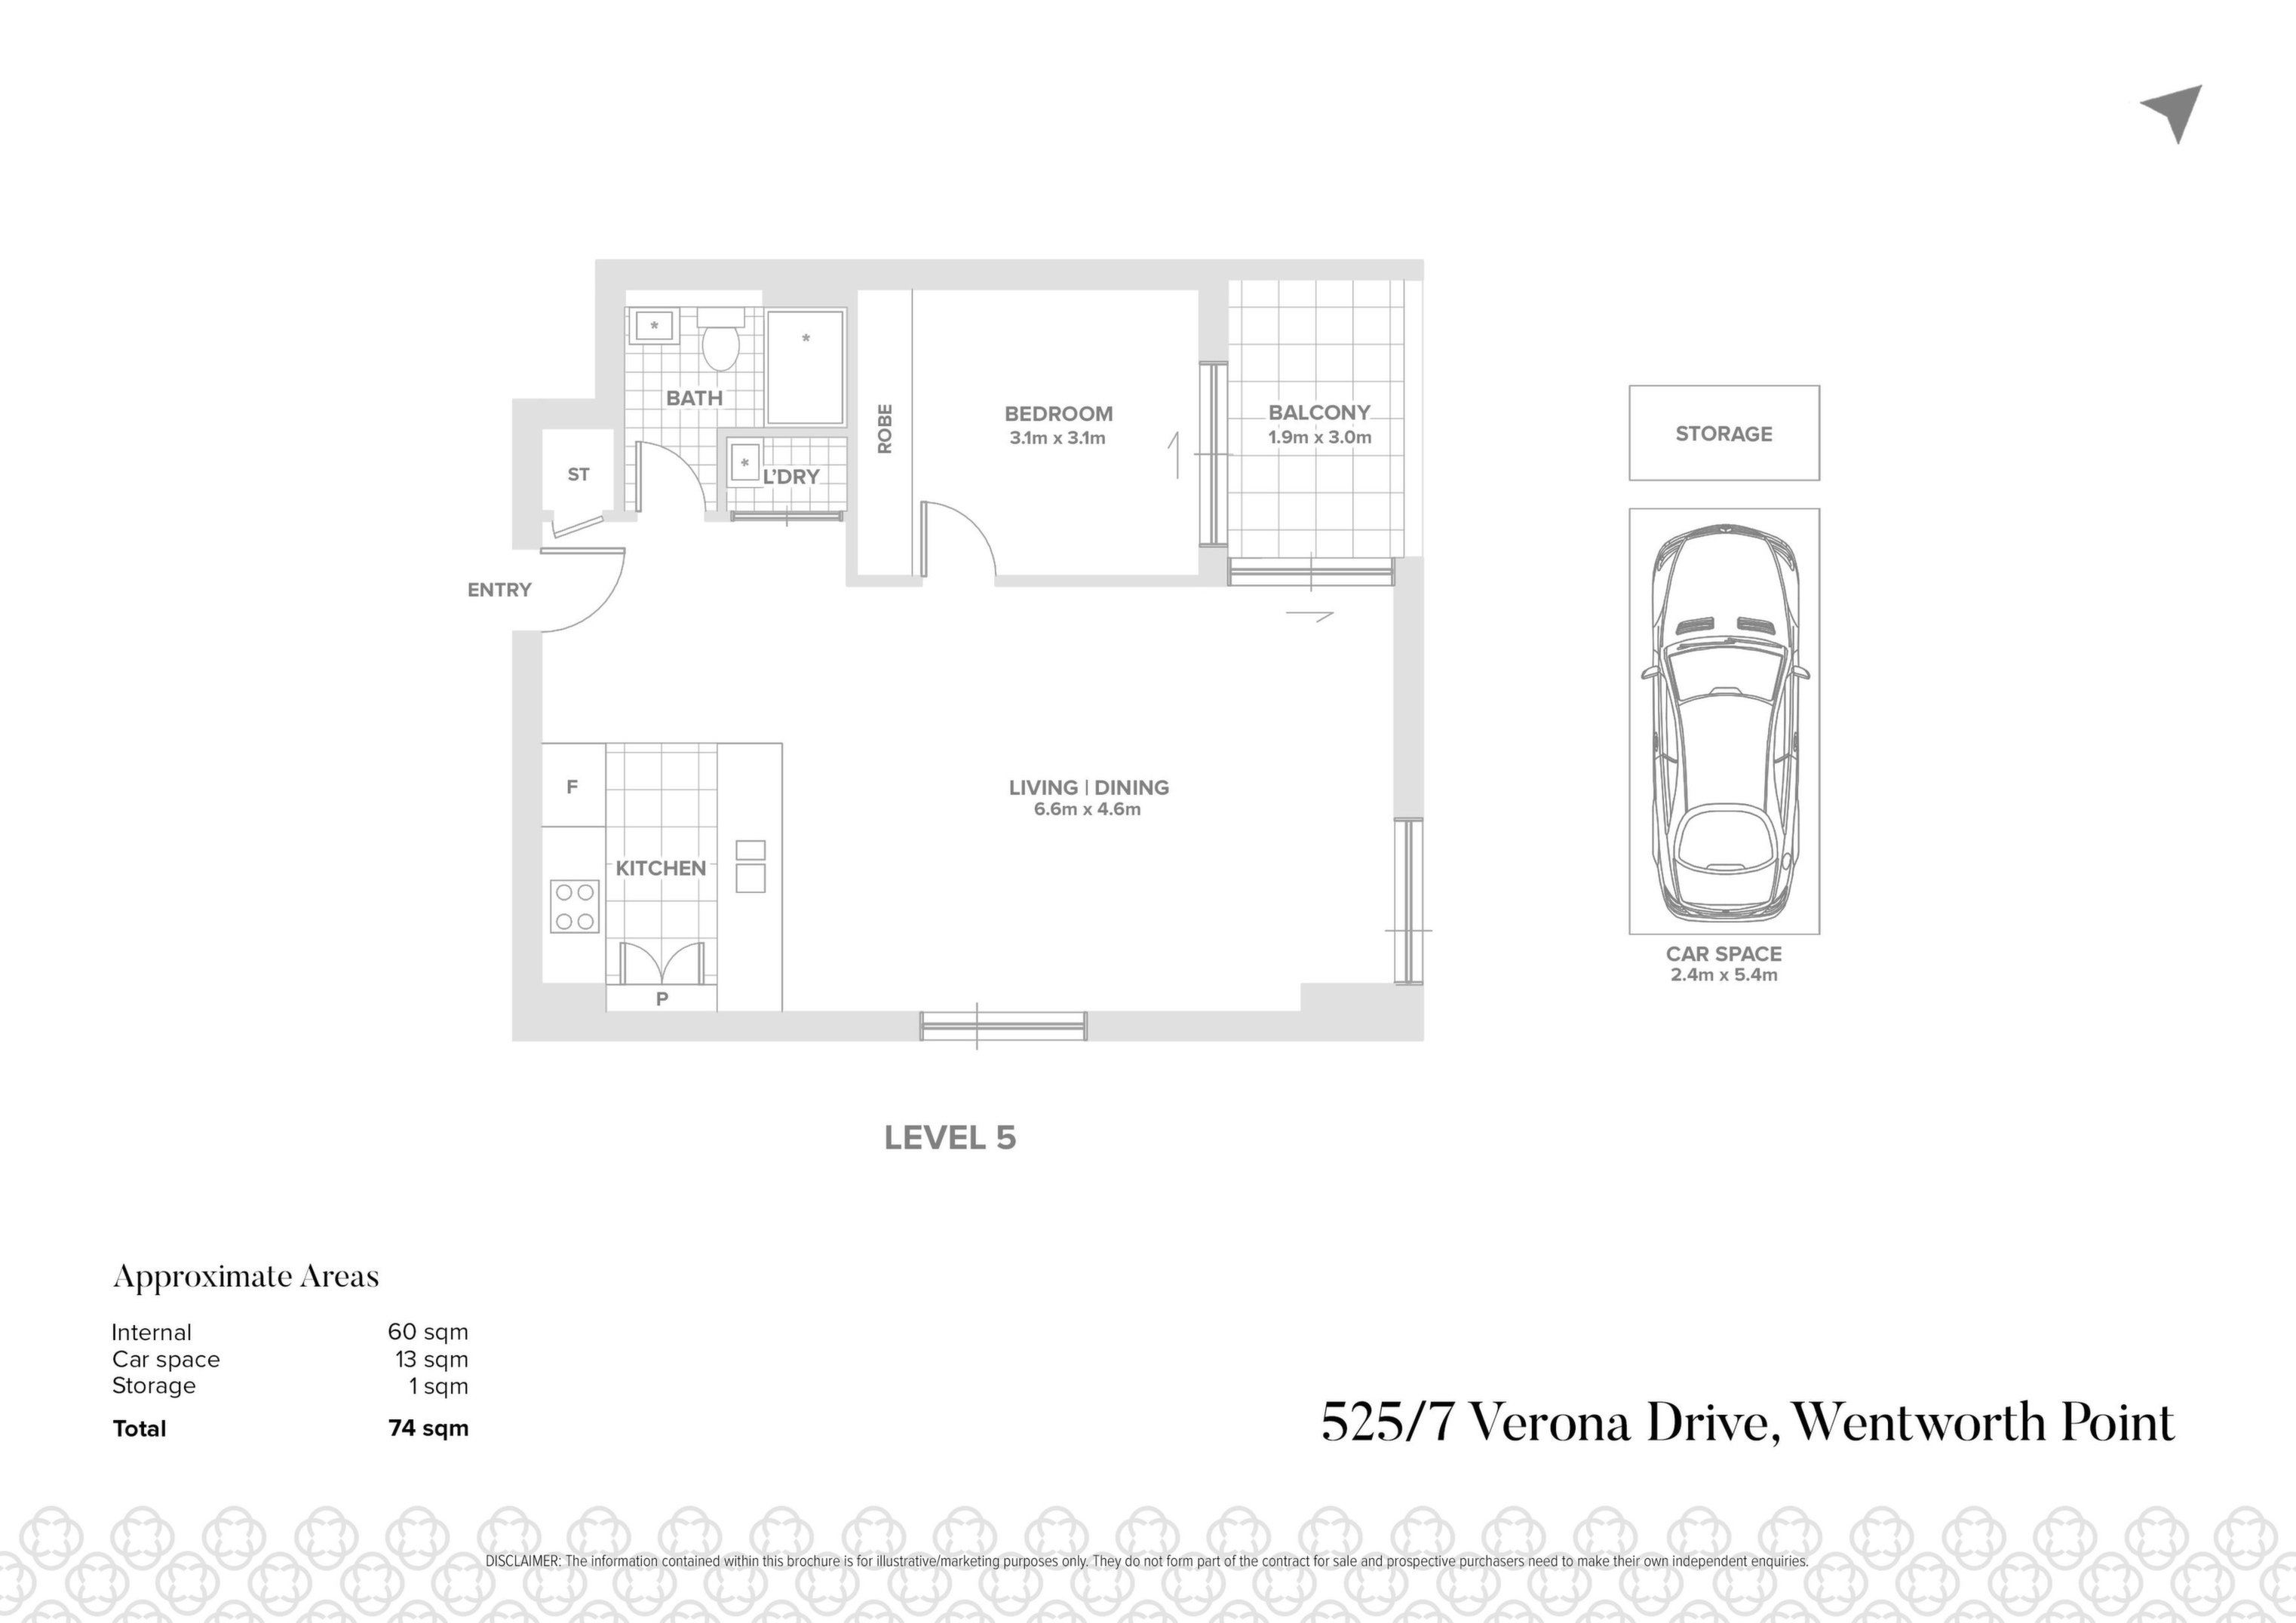 525/46 Savona Drive, Wentworth Point Sold by Chidiac Realty - floorplan